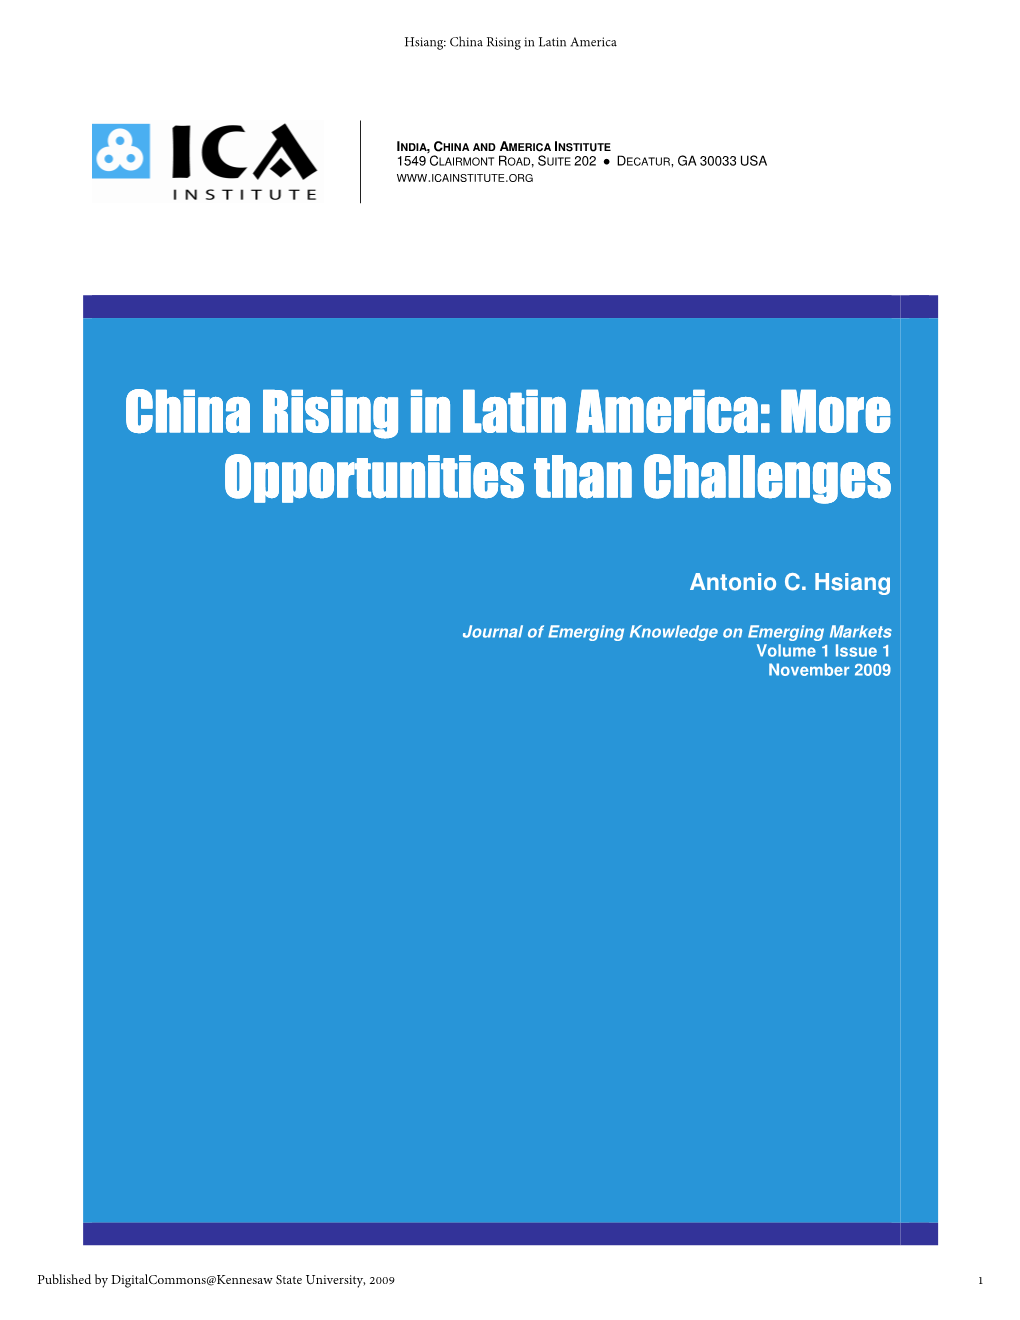 China Rising in Latin America